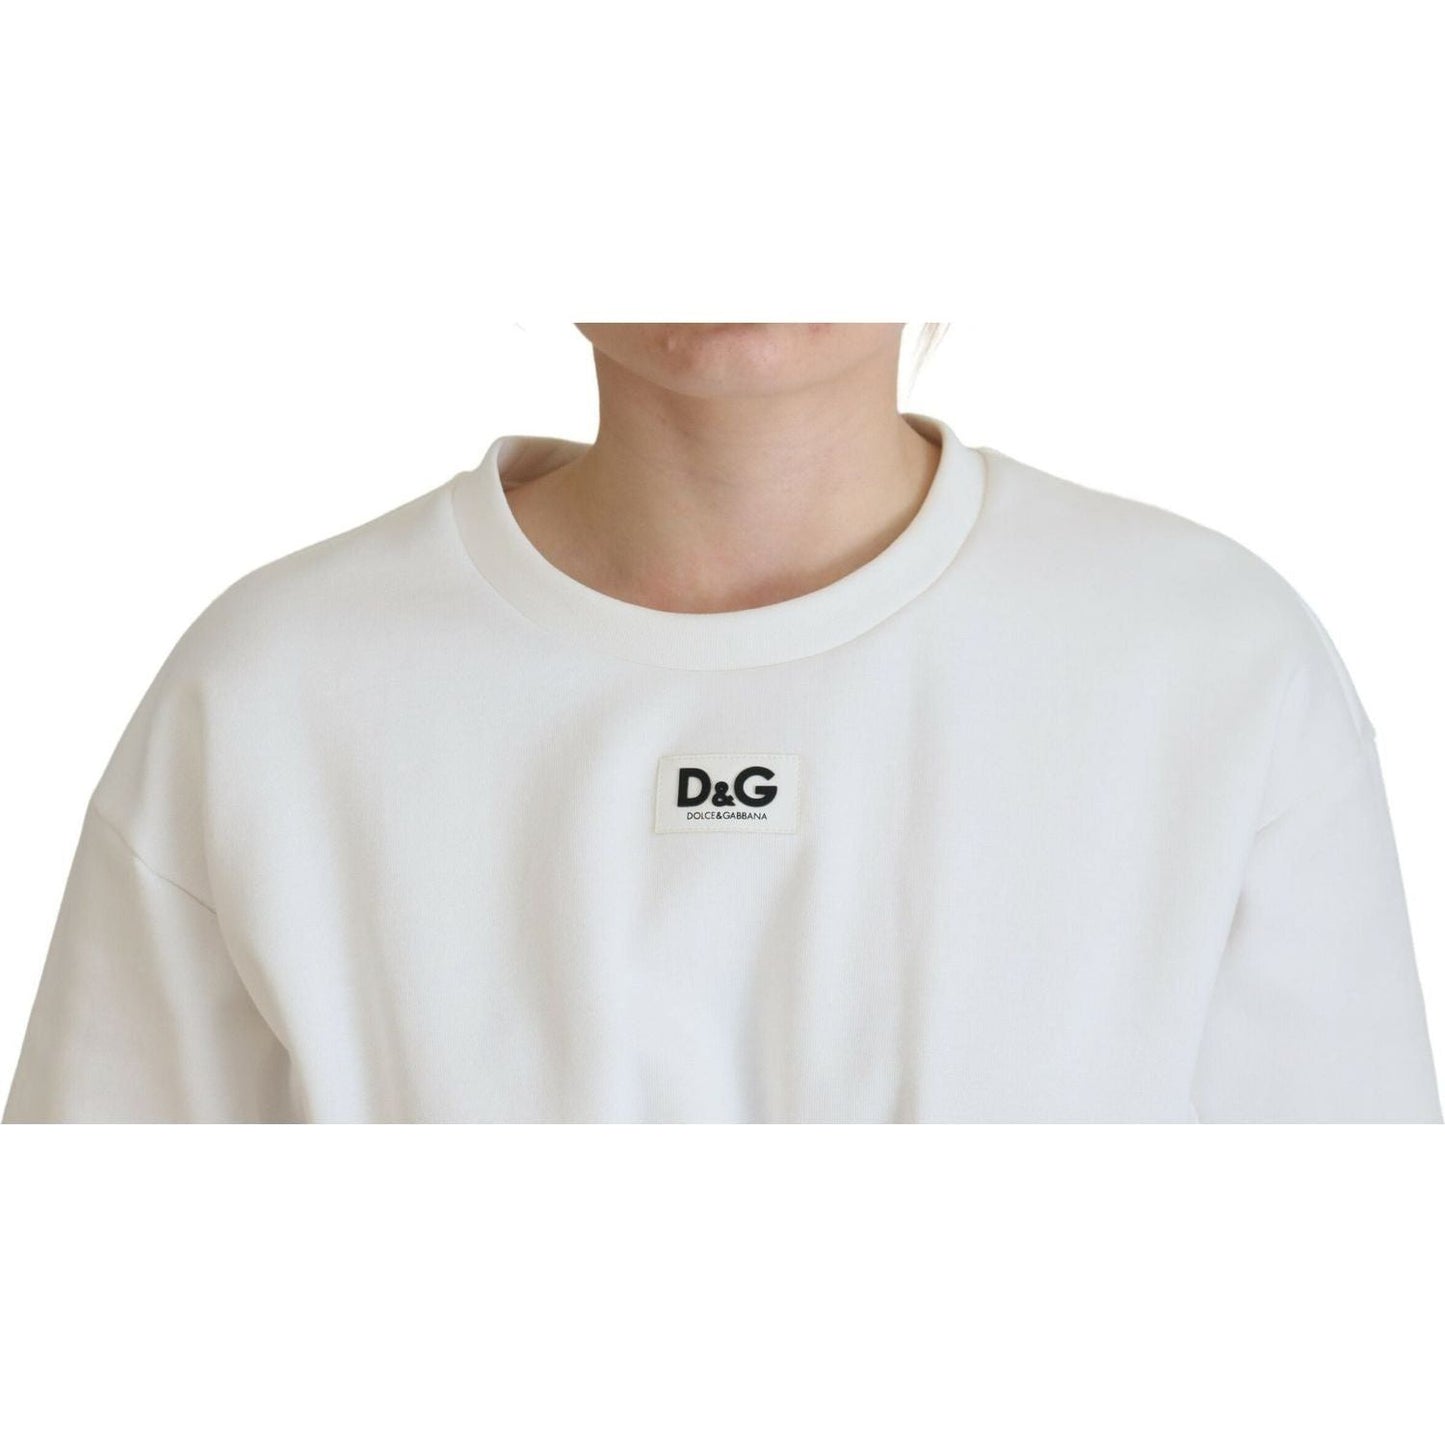 Dolce & Gabbana Elegant Corset Top T-Shirt Blouse white-corset-stretch-cotton-top-t-shirt